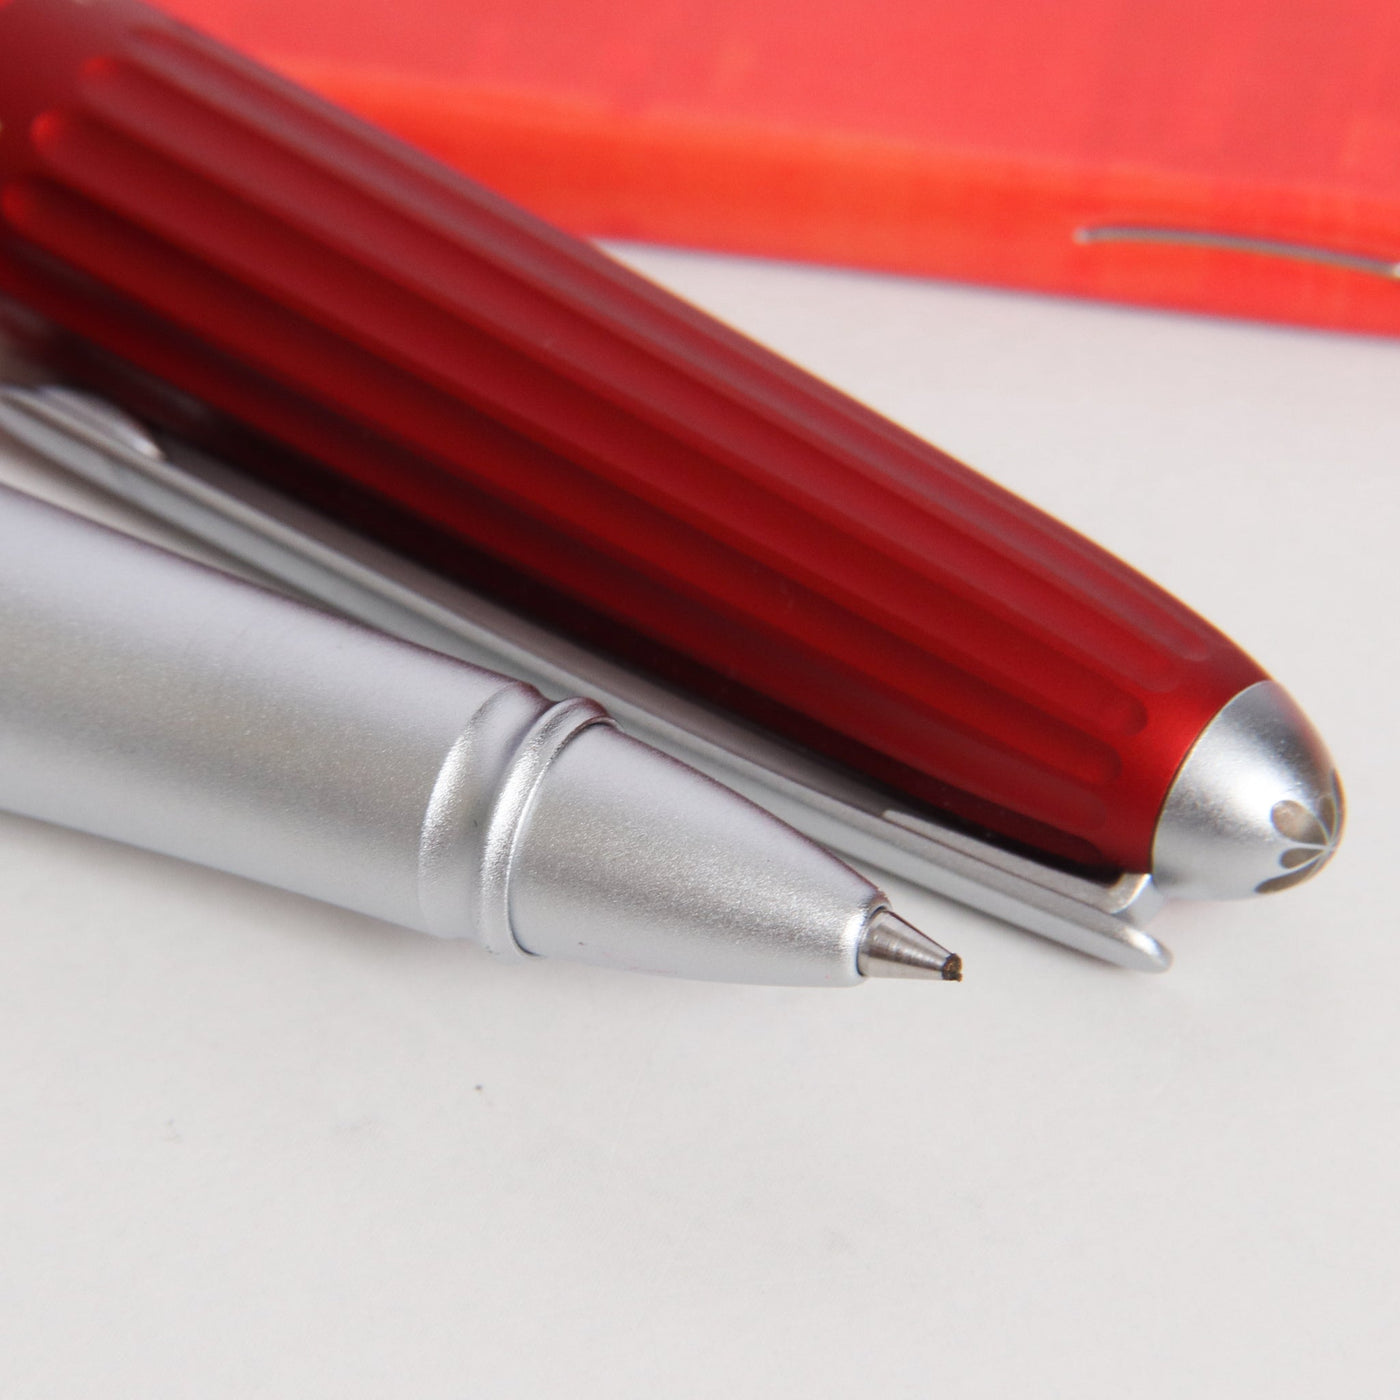 Diplomat Aero Red Rollerball Pen Tip Details